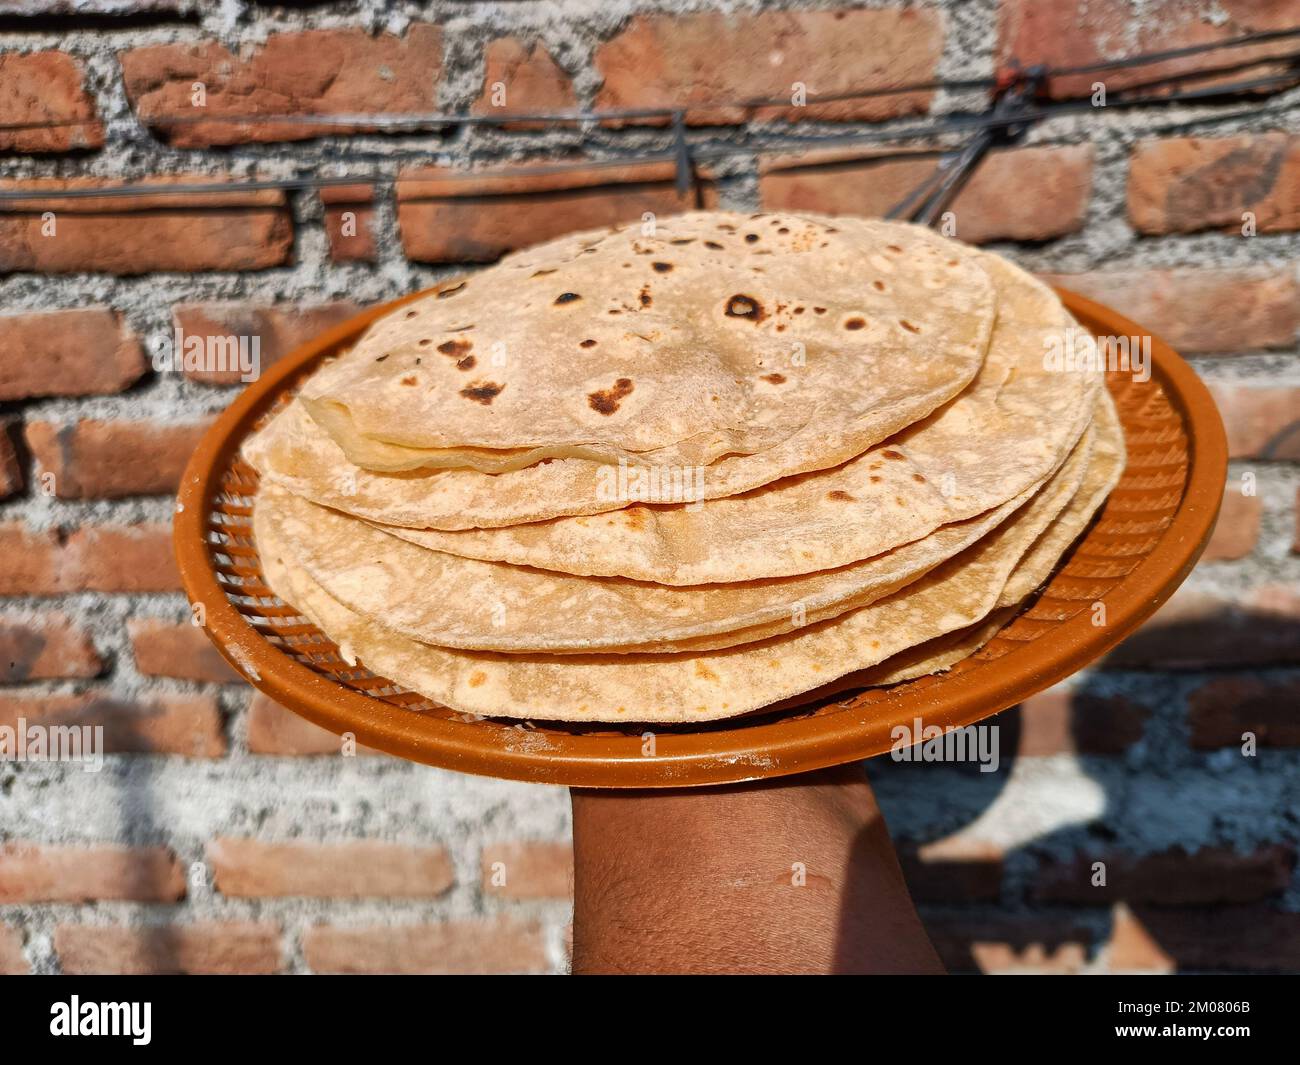 Chapati Stock Photos, Royalty Free Chapati Images | Depositphotos